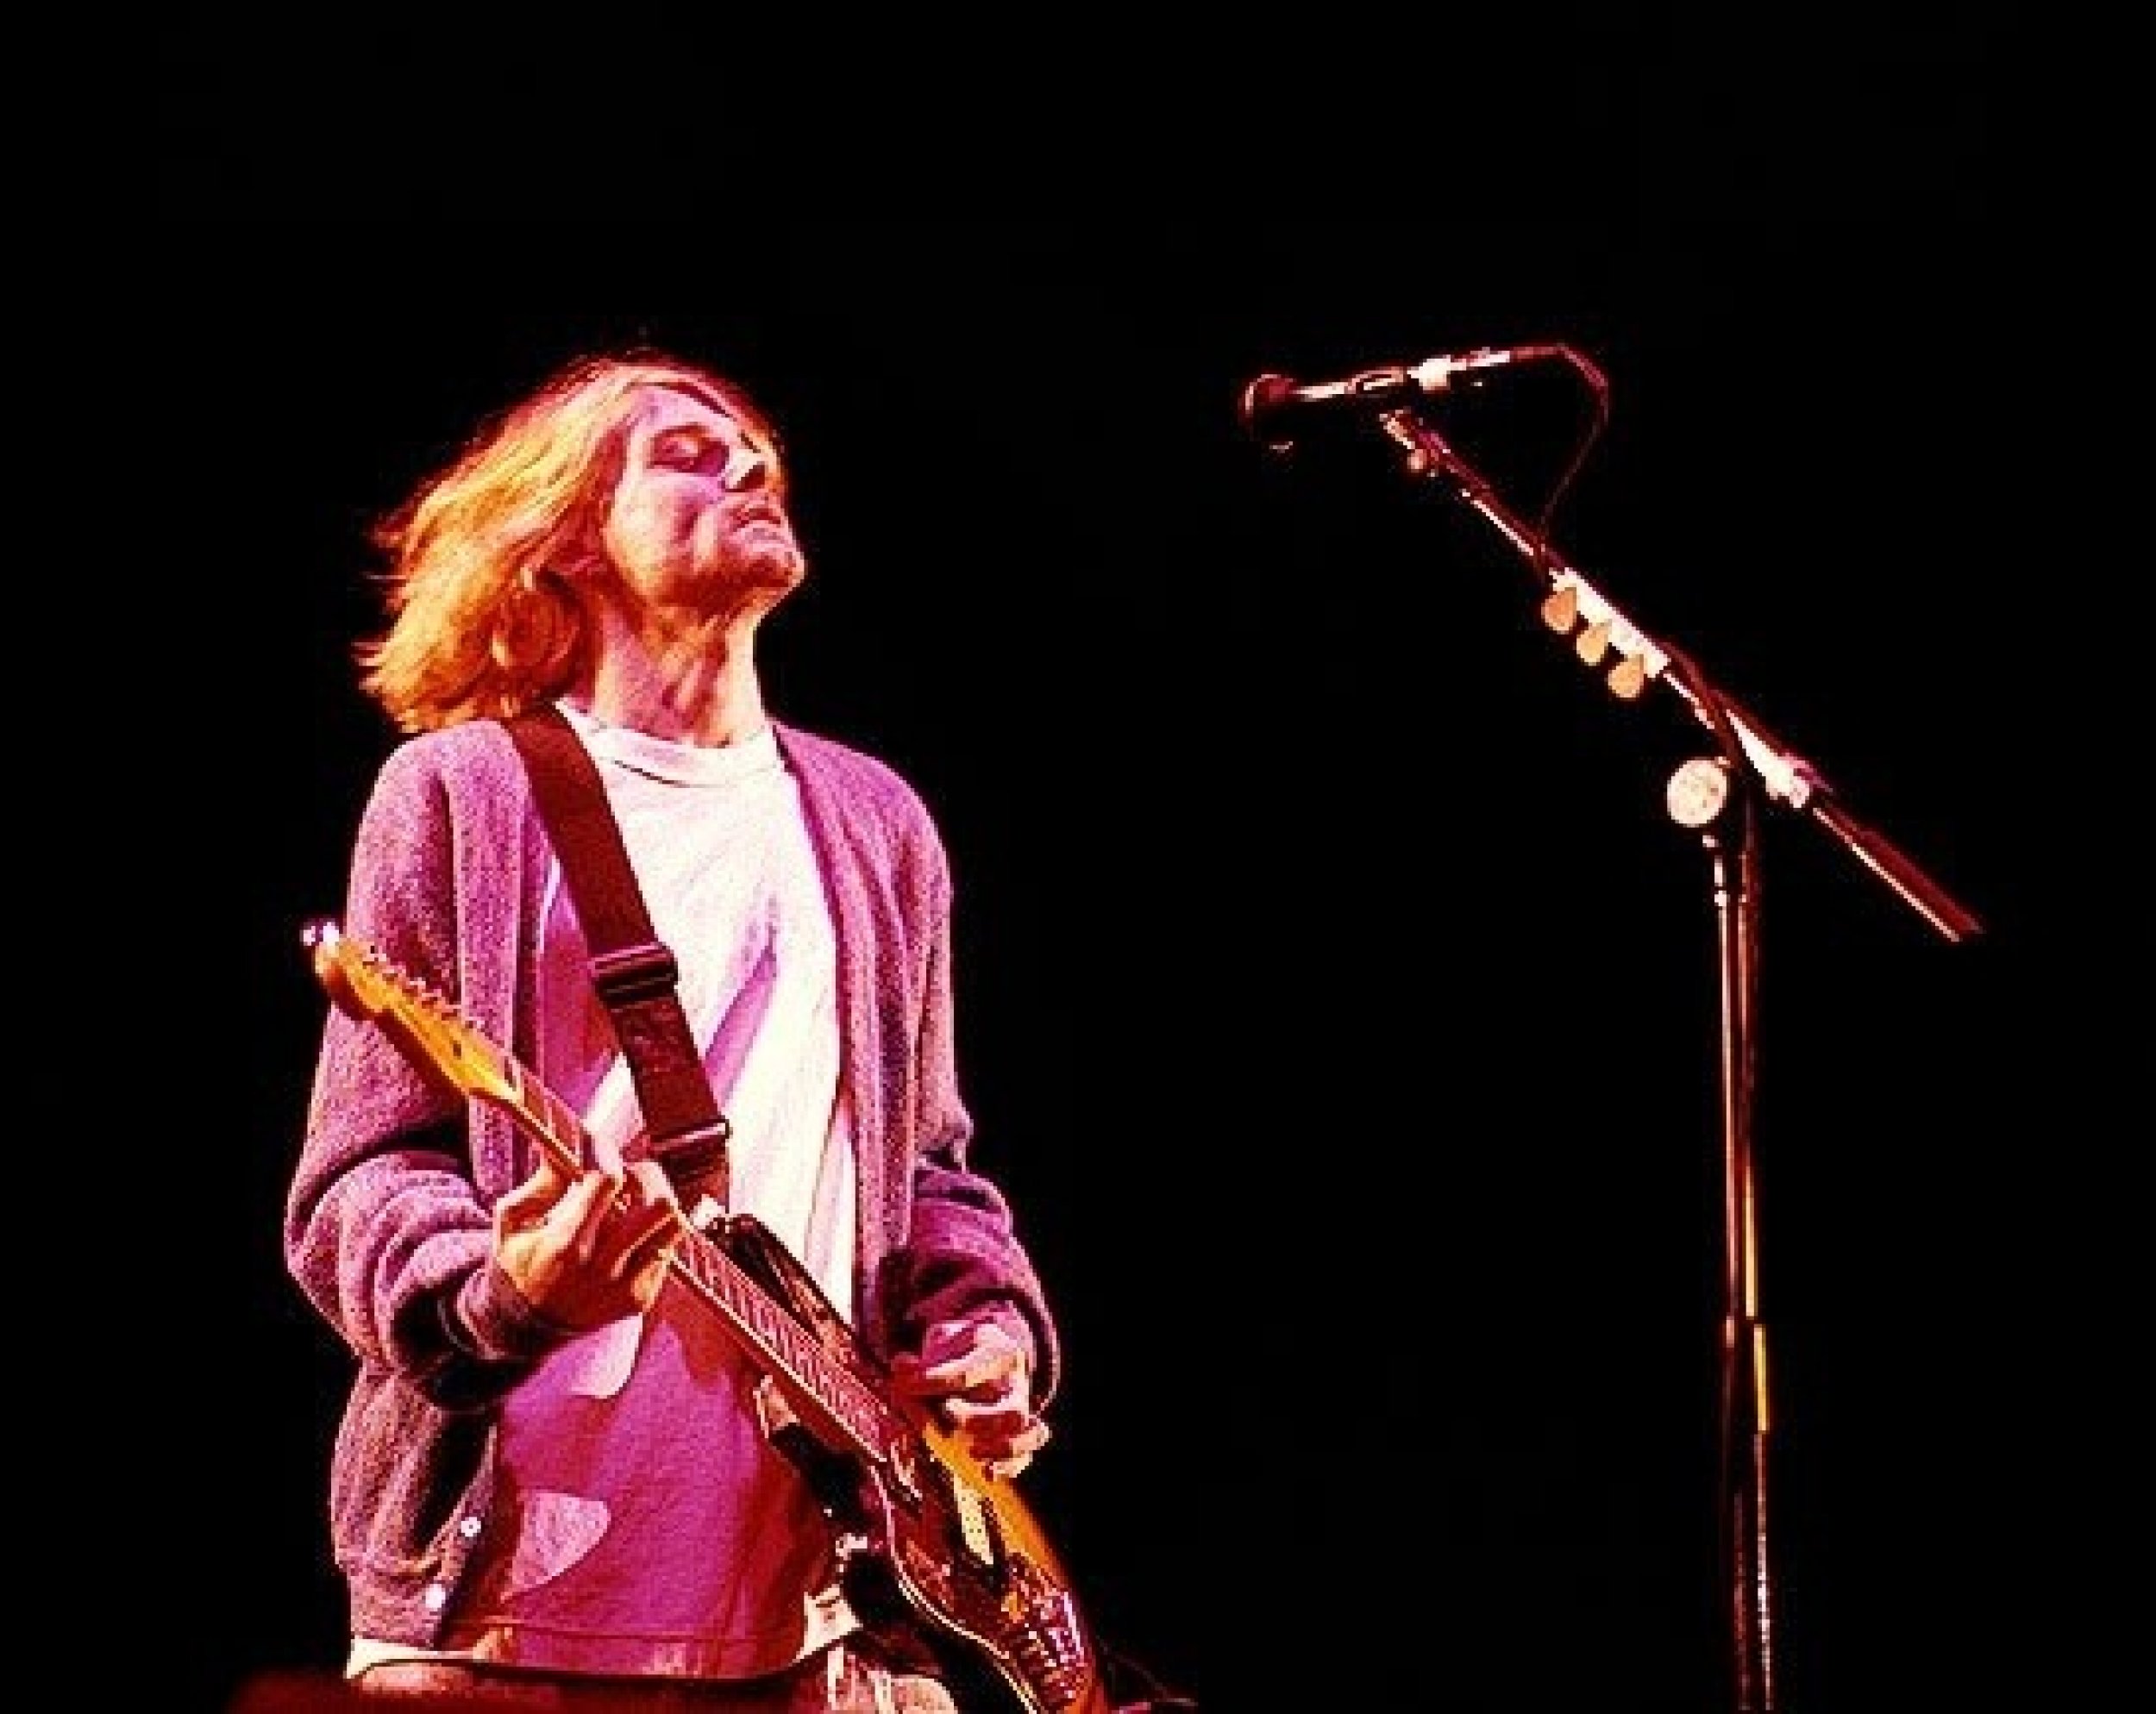 Kurt Cobain playing his Fender Jaguar